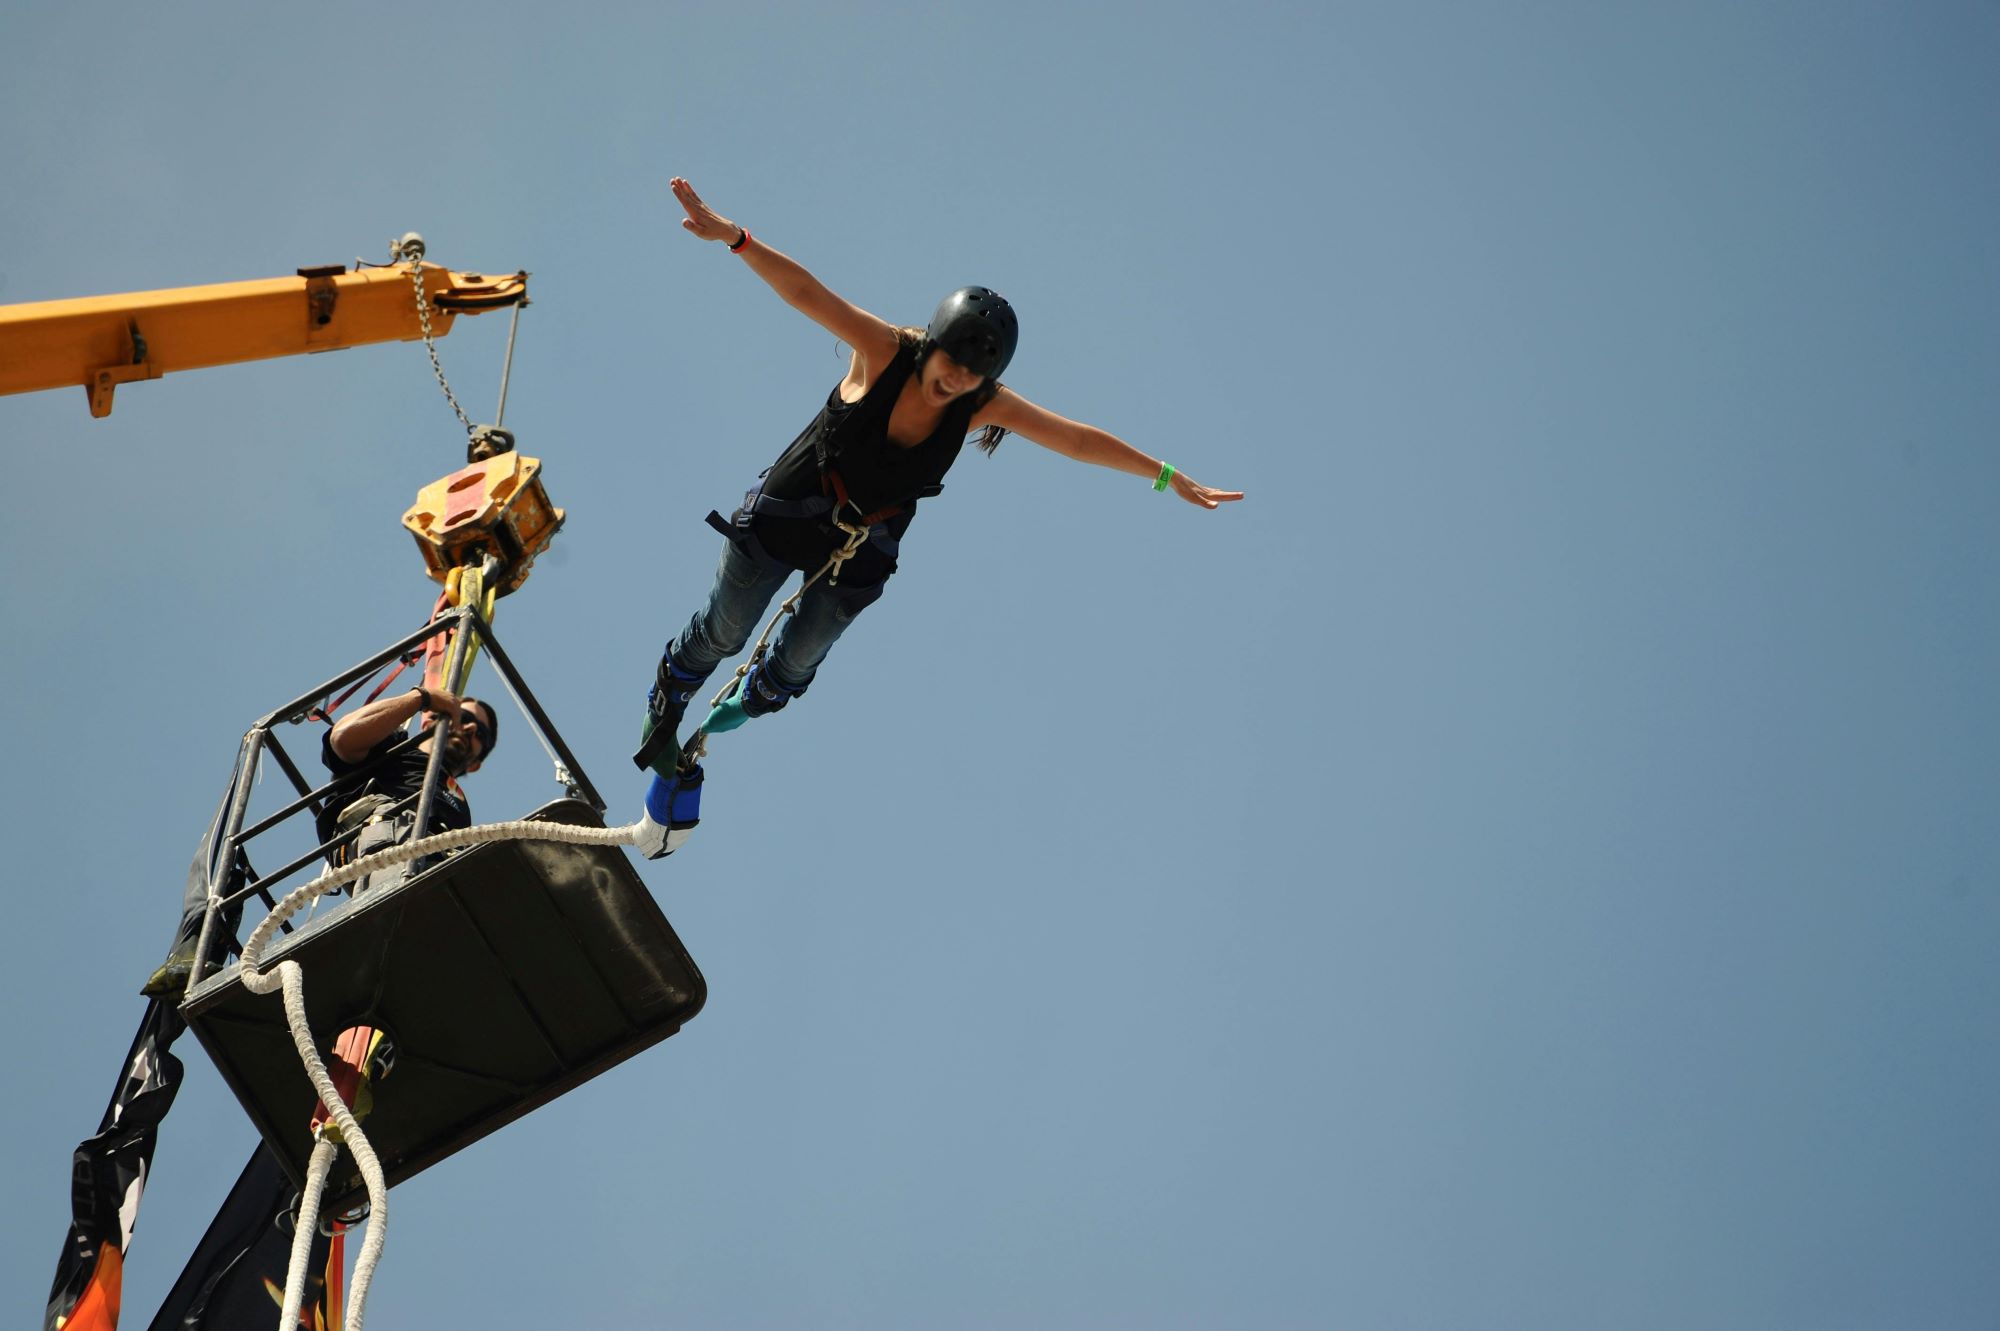 Znany sport ekstremalny po angielsku: bungee jumping.